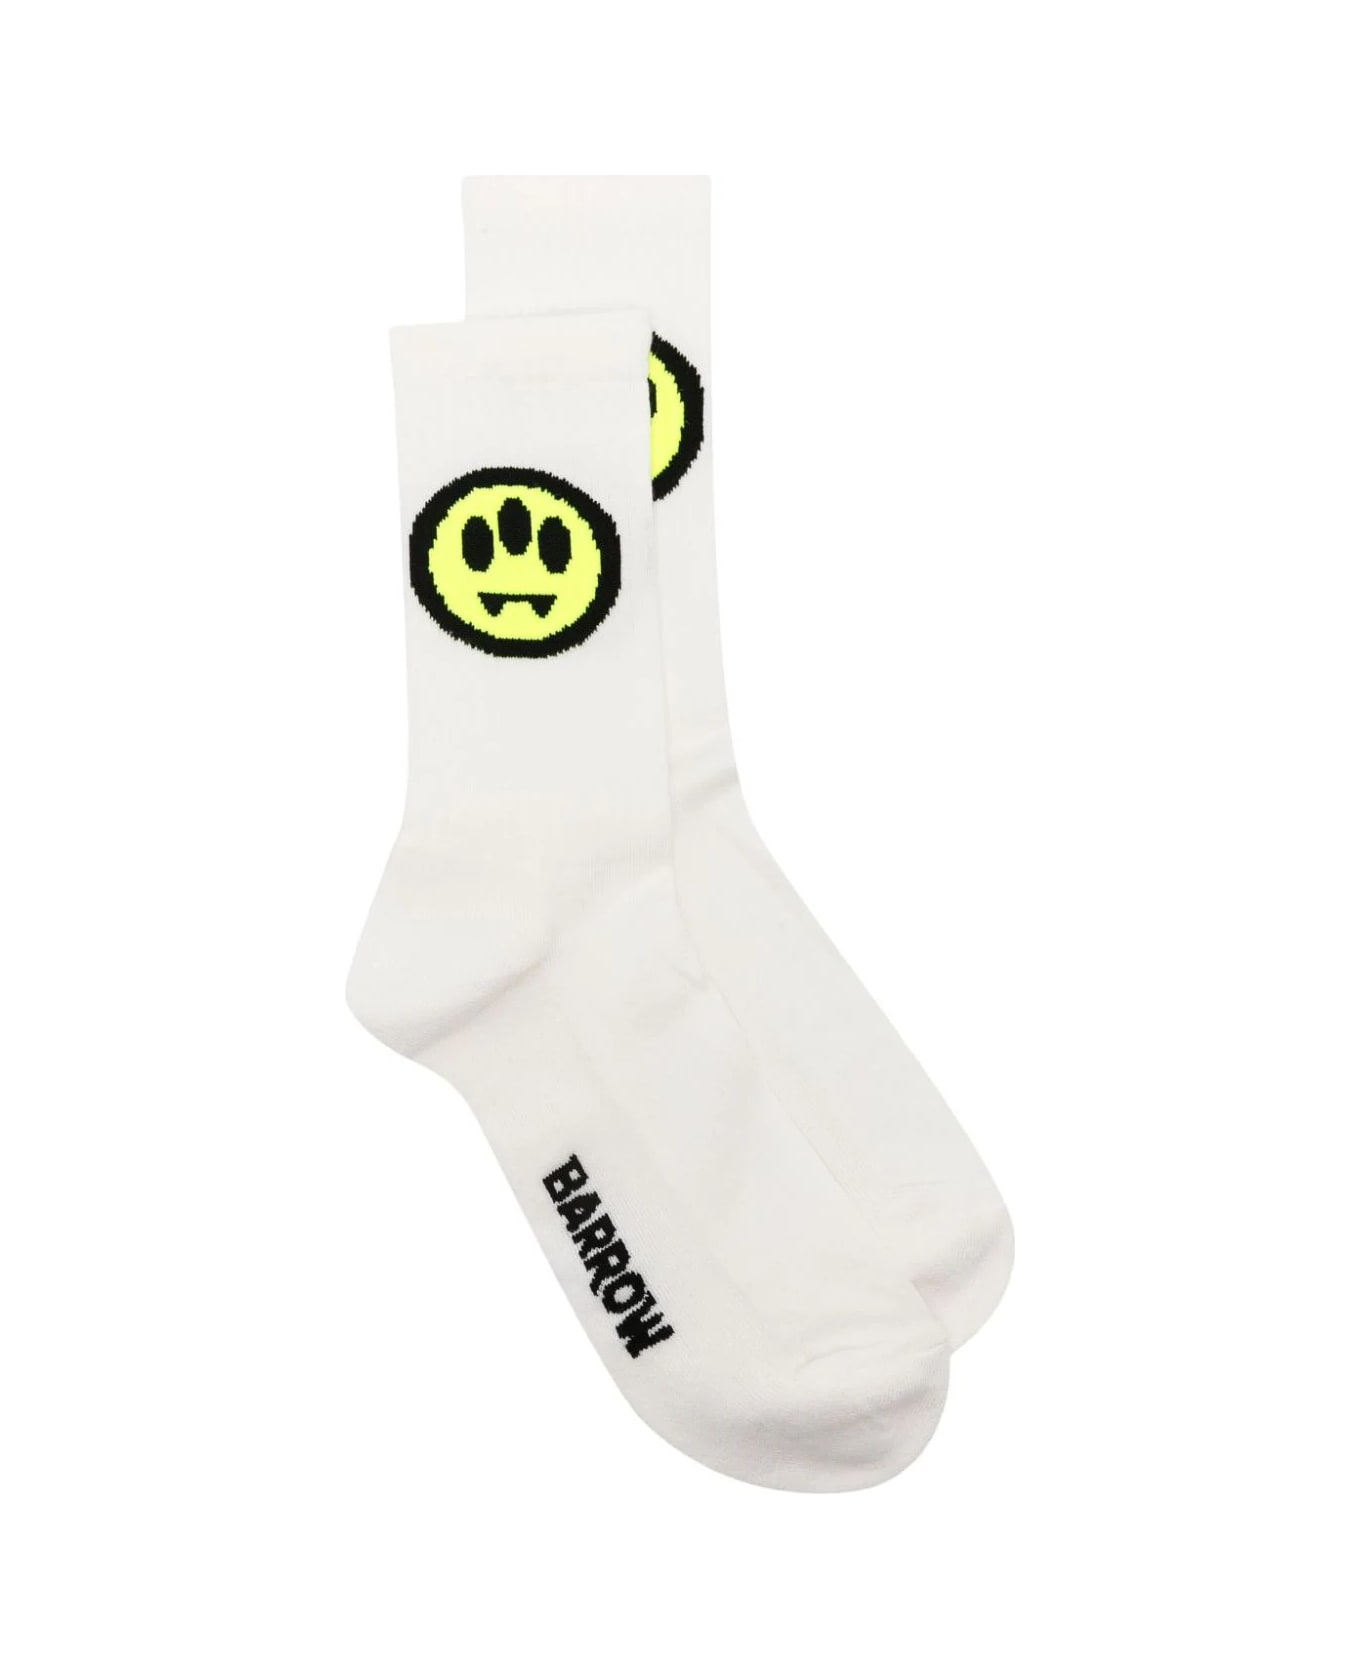 Barrow White Socks With Logo - White 靴下